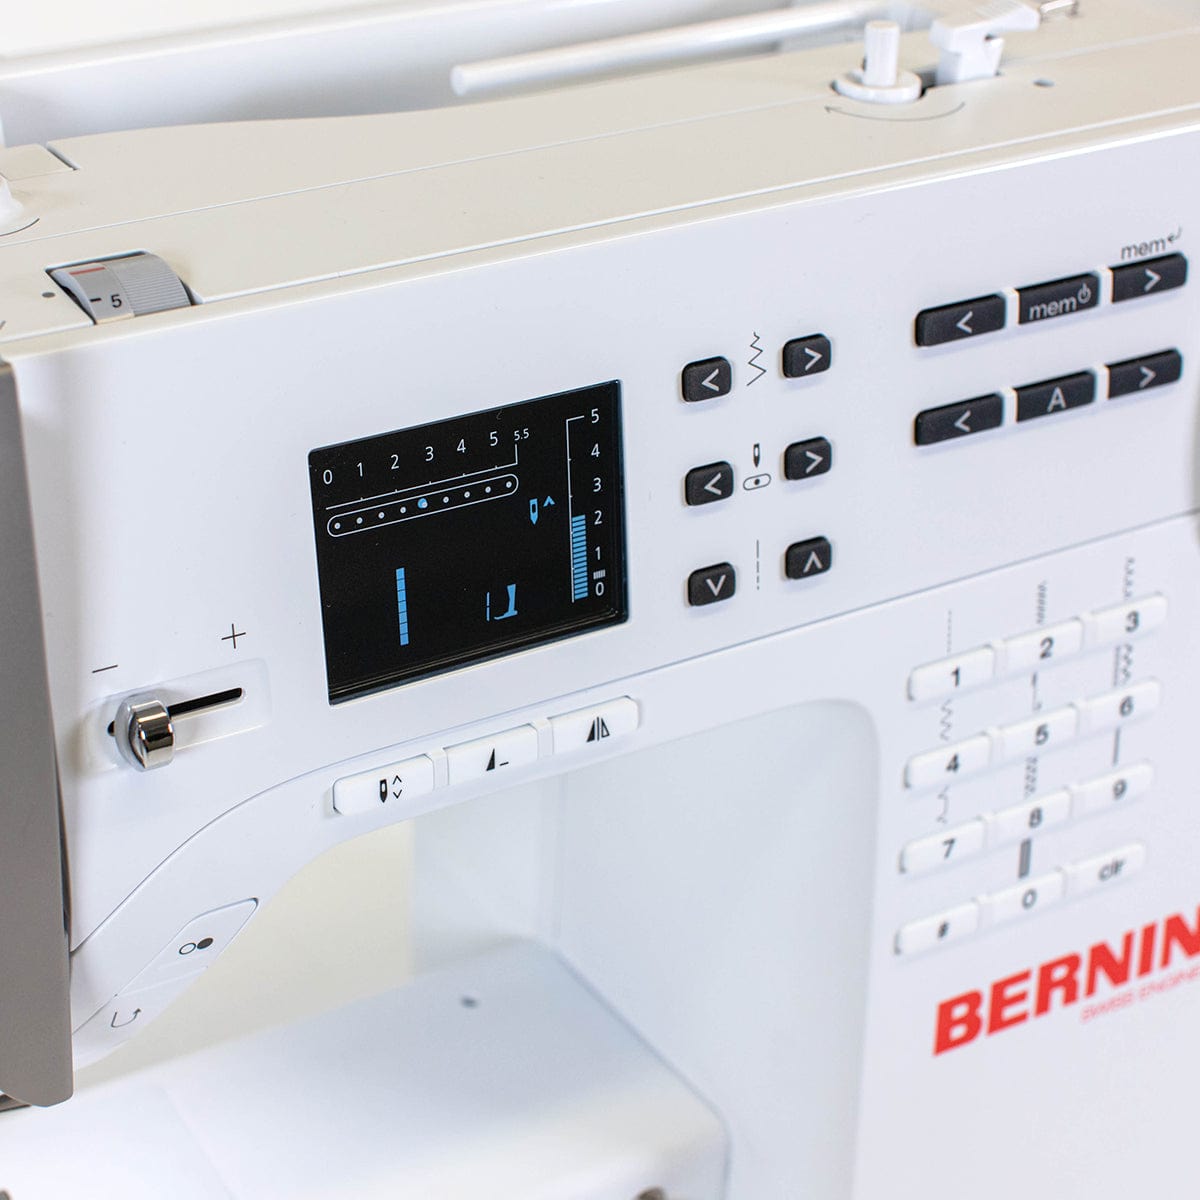 Bernina 335 Sewing Machine + Free Walking Foot Worth £120 for May 24